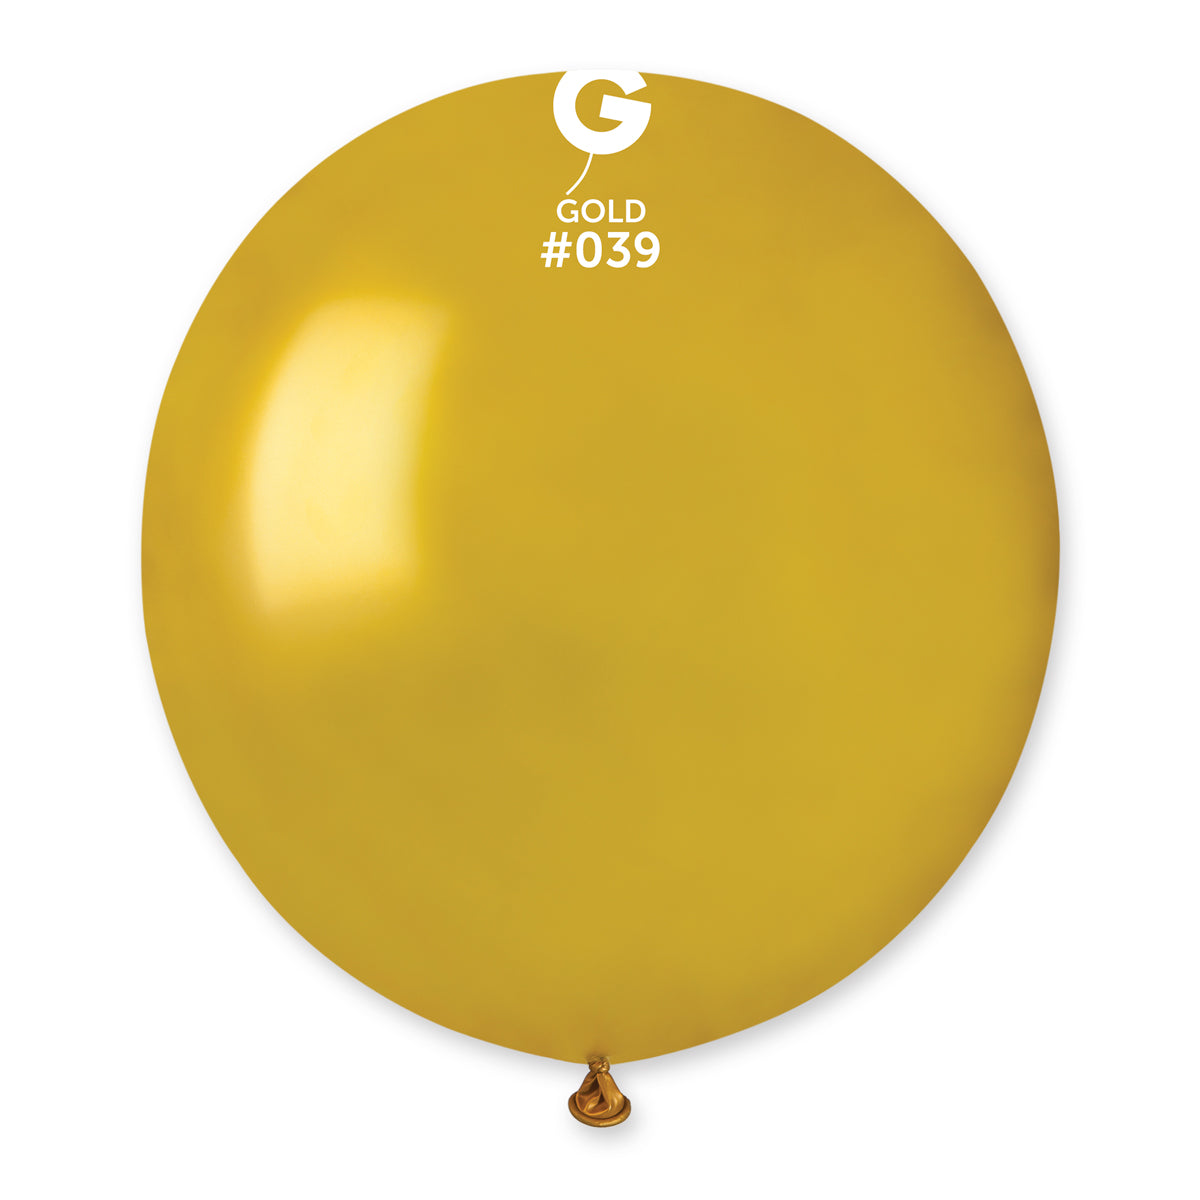 GM150: #039 Metal Gold Metallic Color 19 in